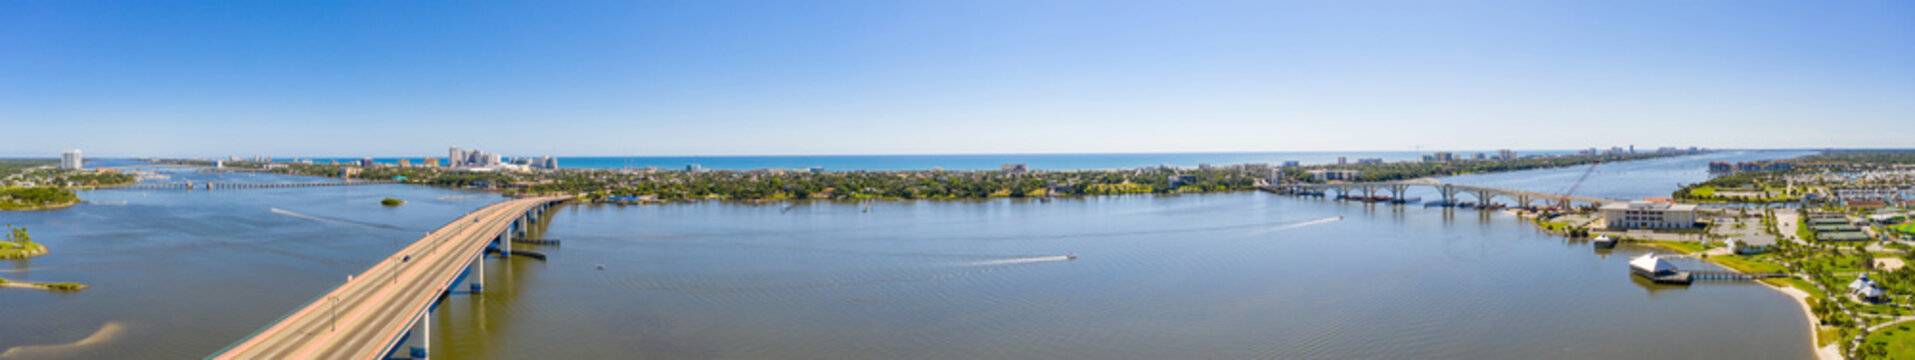 Aerial panorama Daytona Beach Florida USA Halifax river